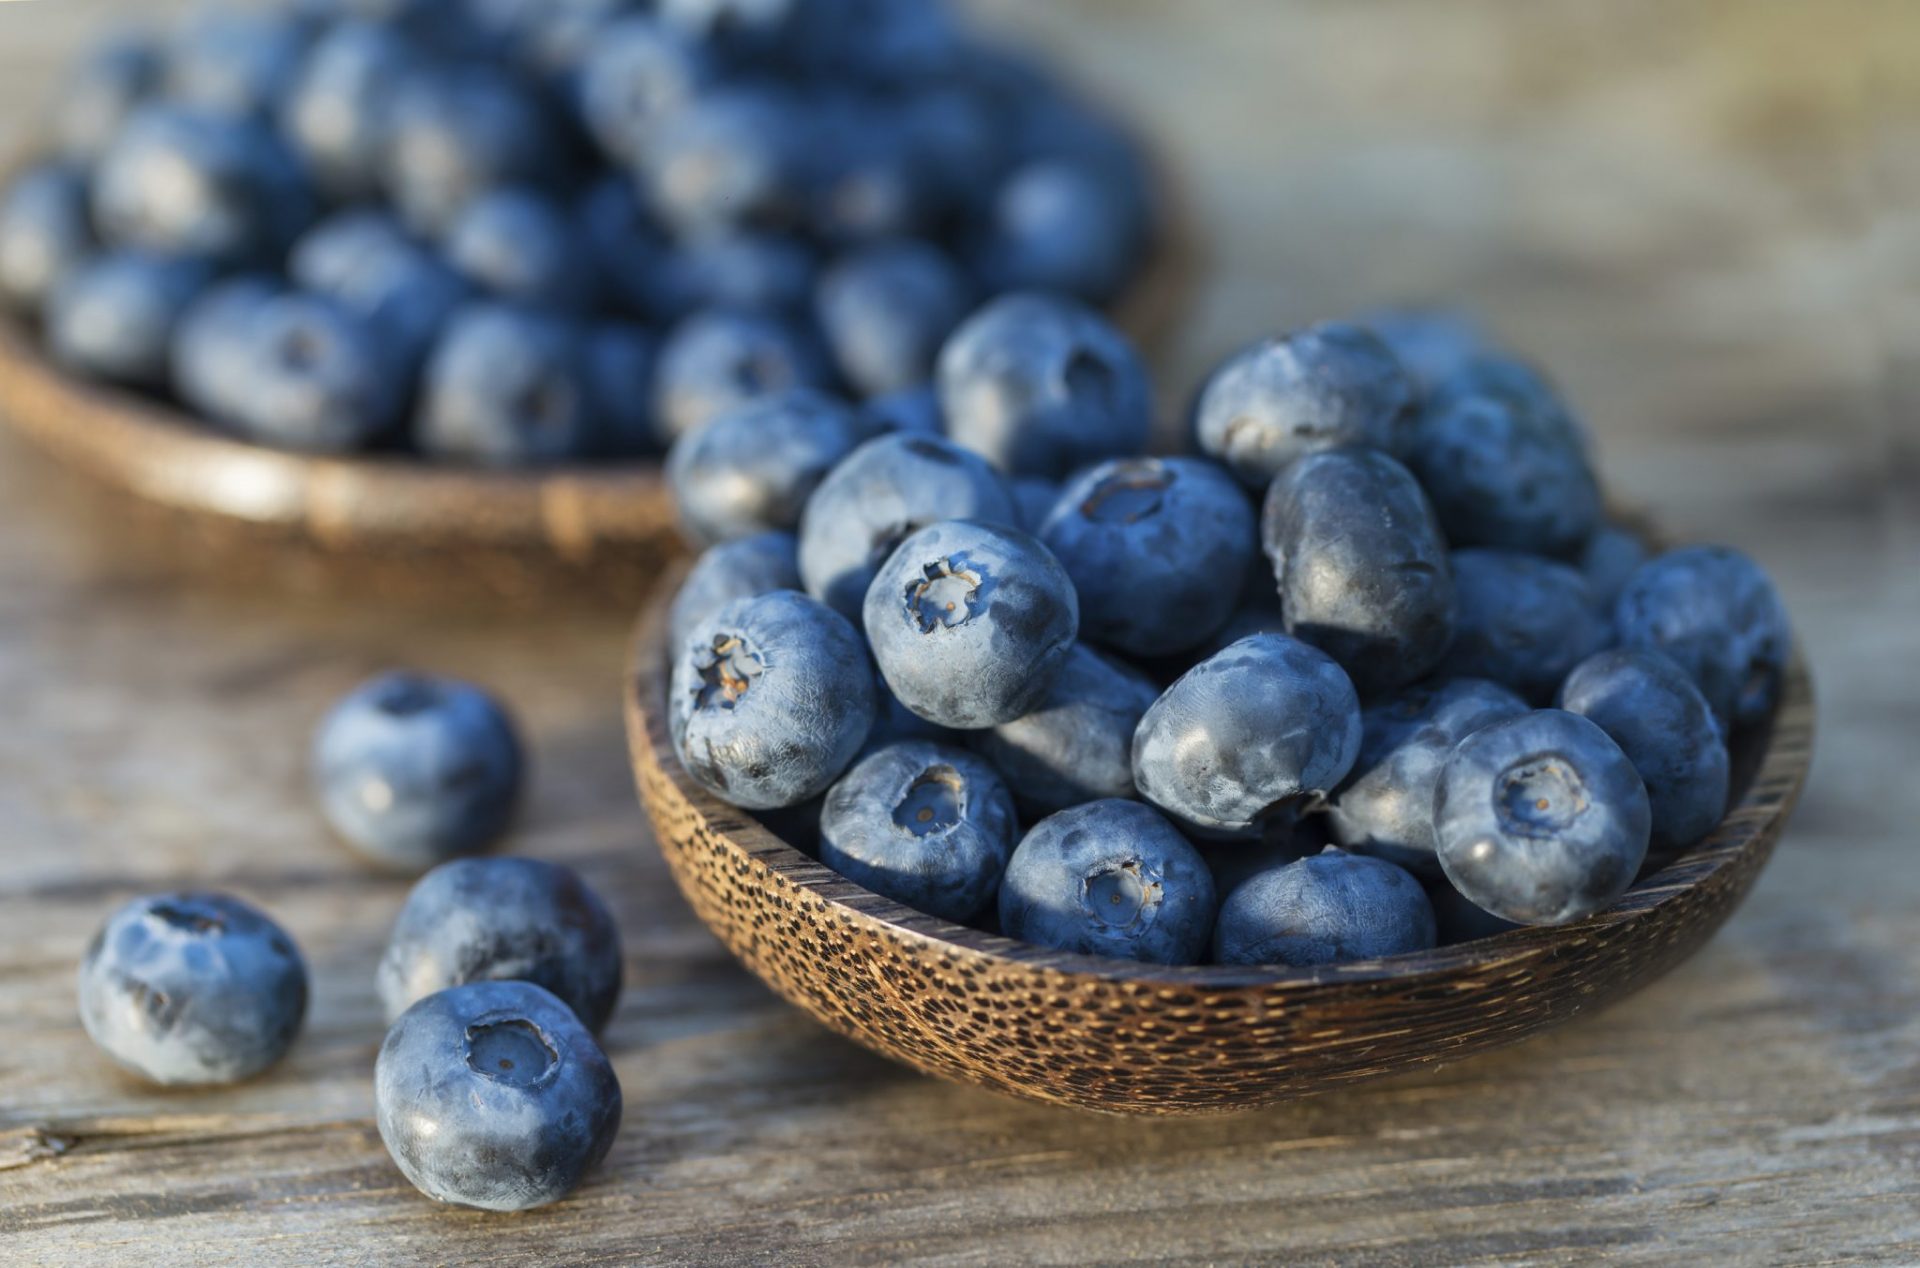 Blueberries show surprising health benefits | NaturalHealth365